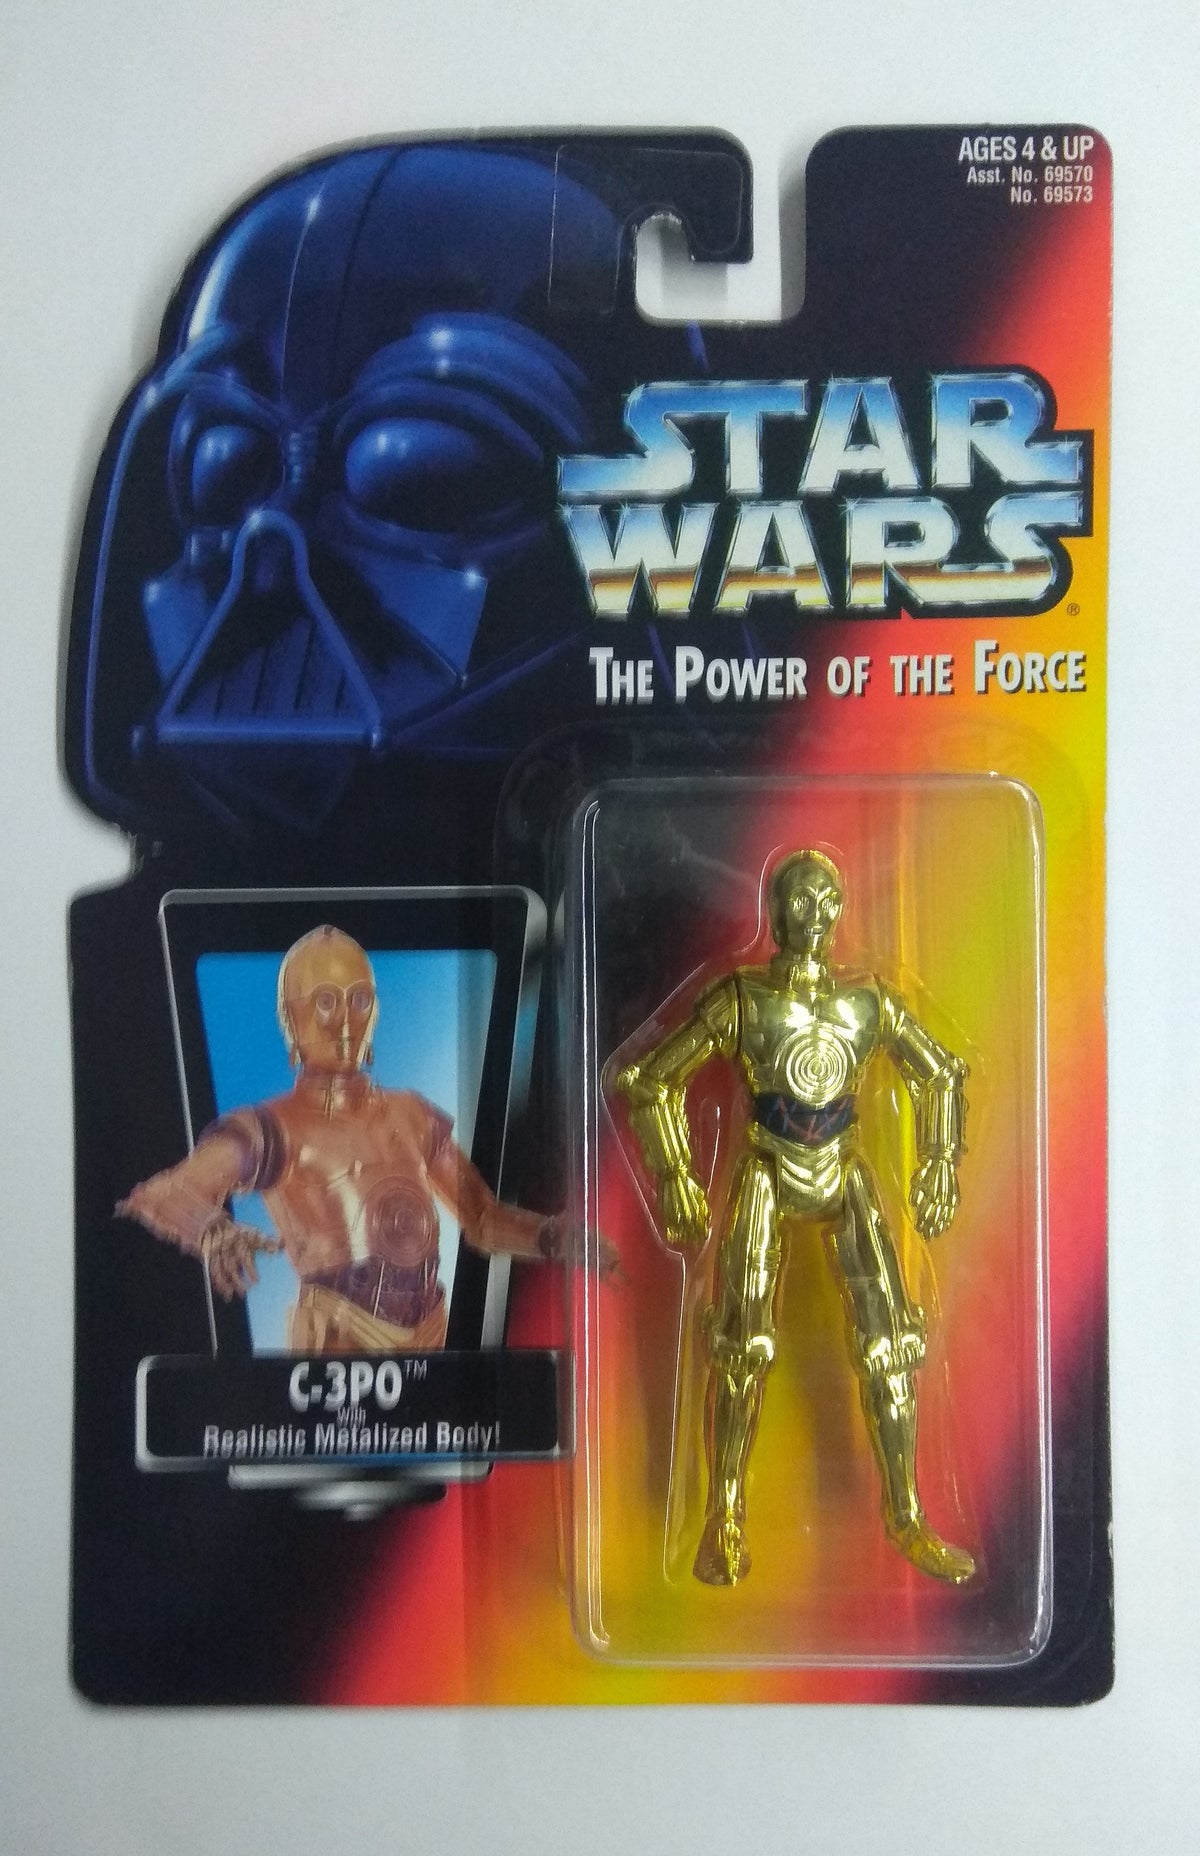 C-3PO With Realistic Metalized Body!